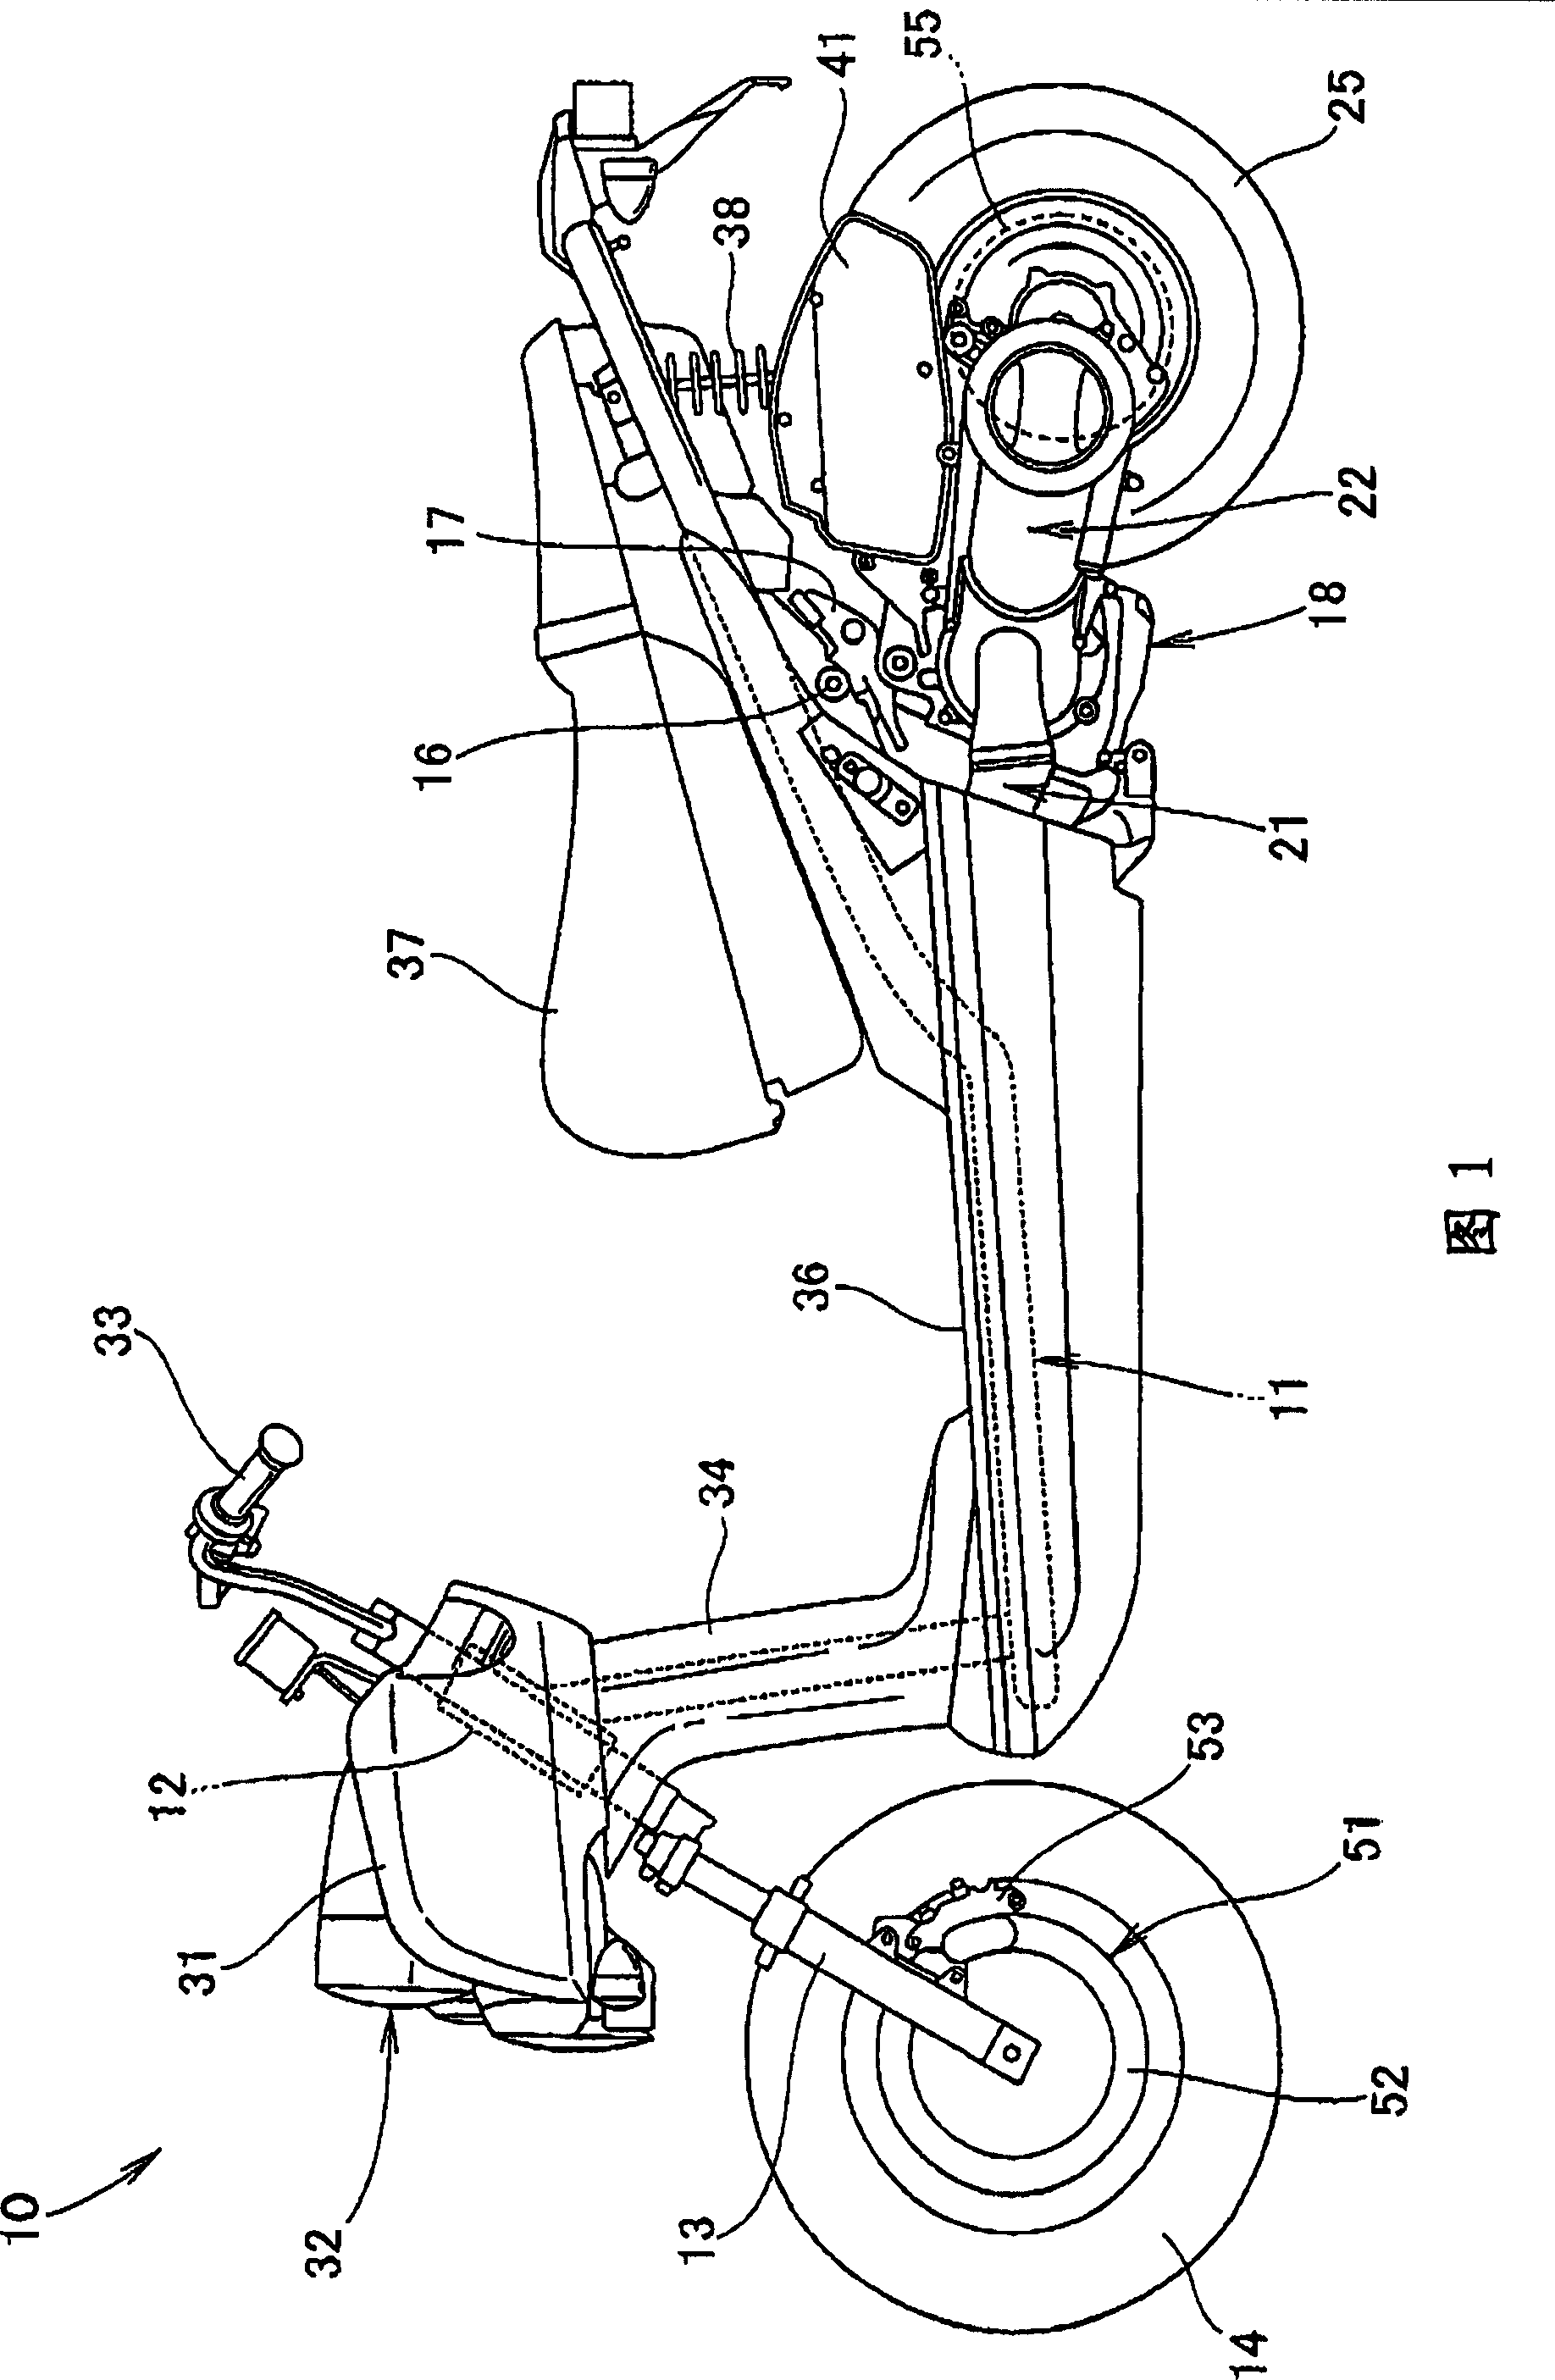 Braking device for vehicle